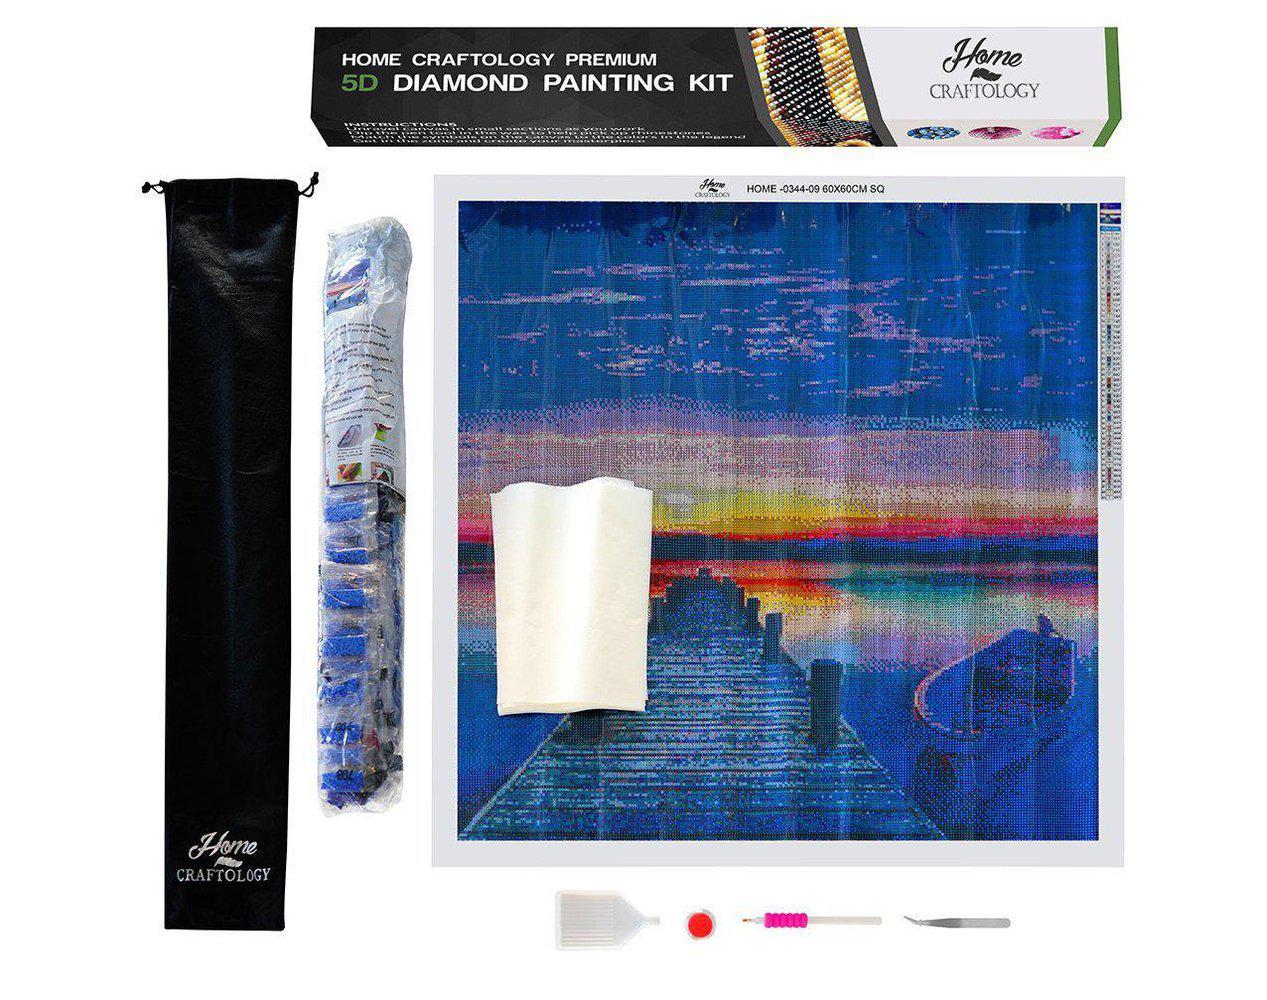 Ghost Gemstone - Premium 5D Poured Glue Diamond Painting Kit